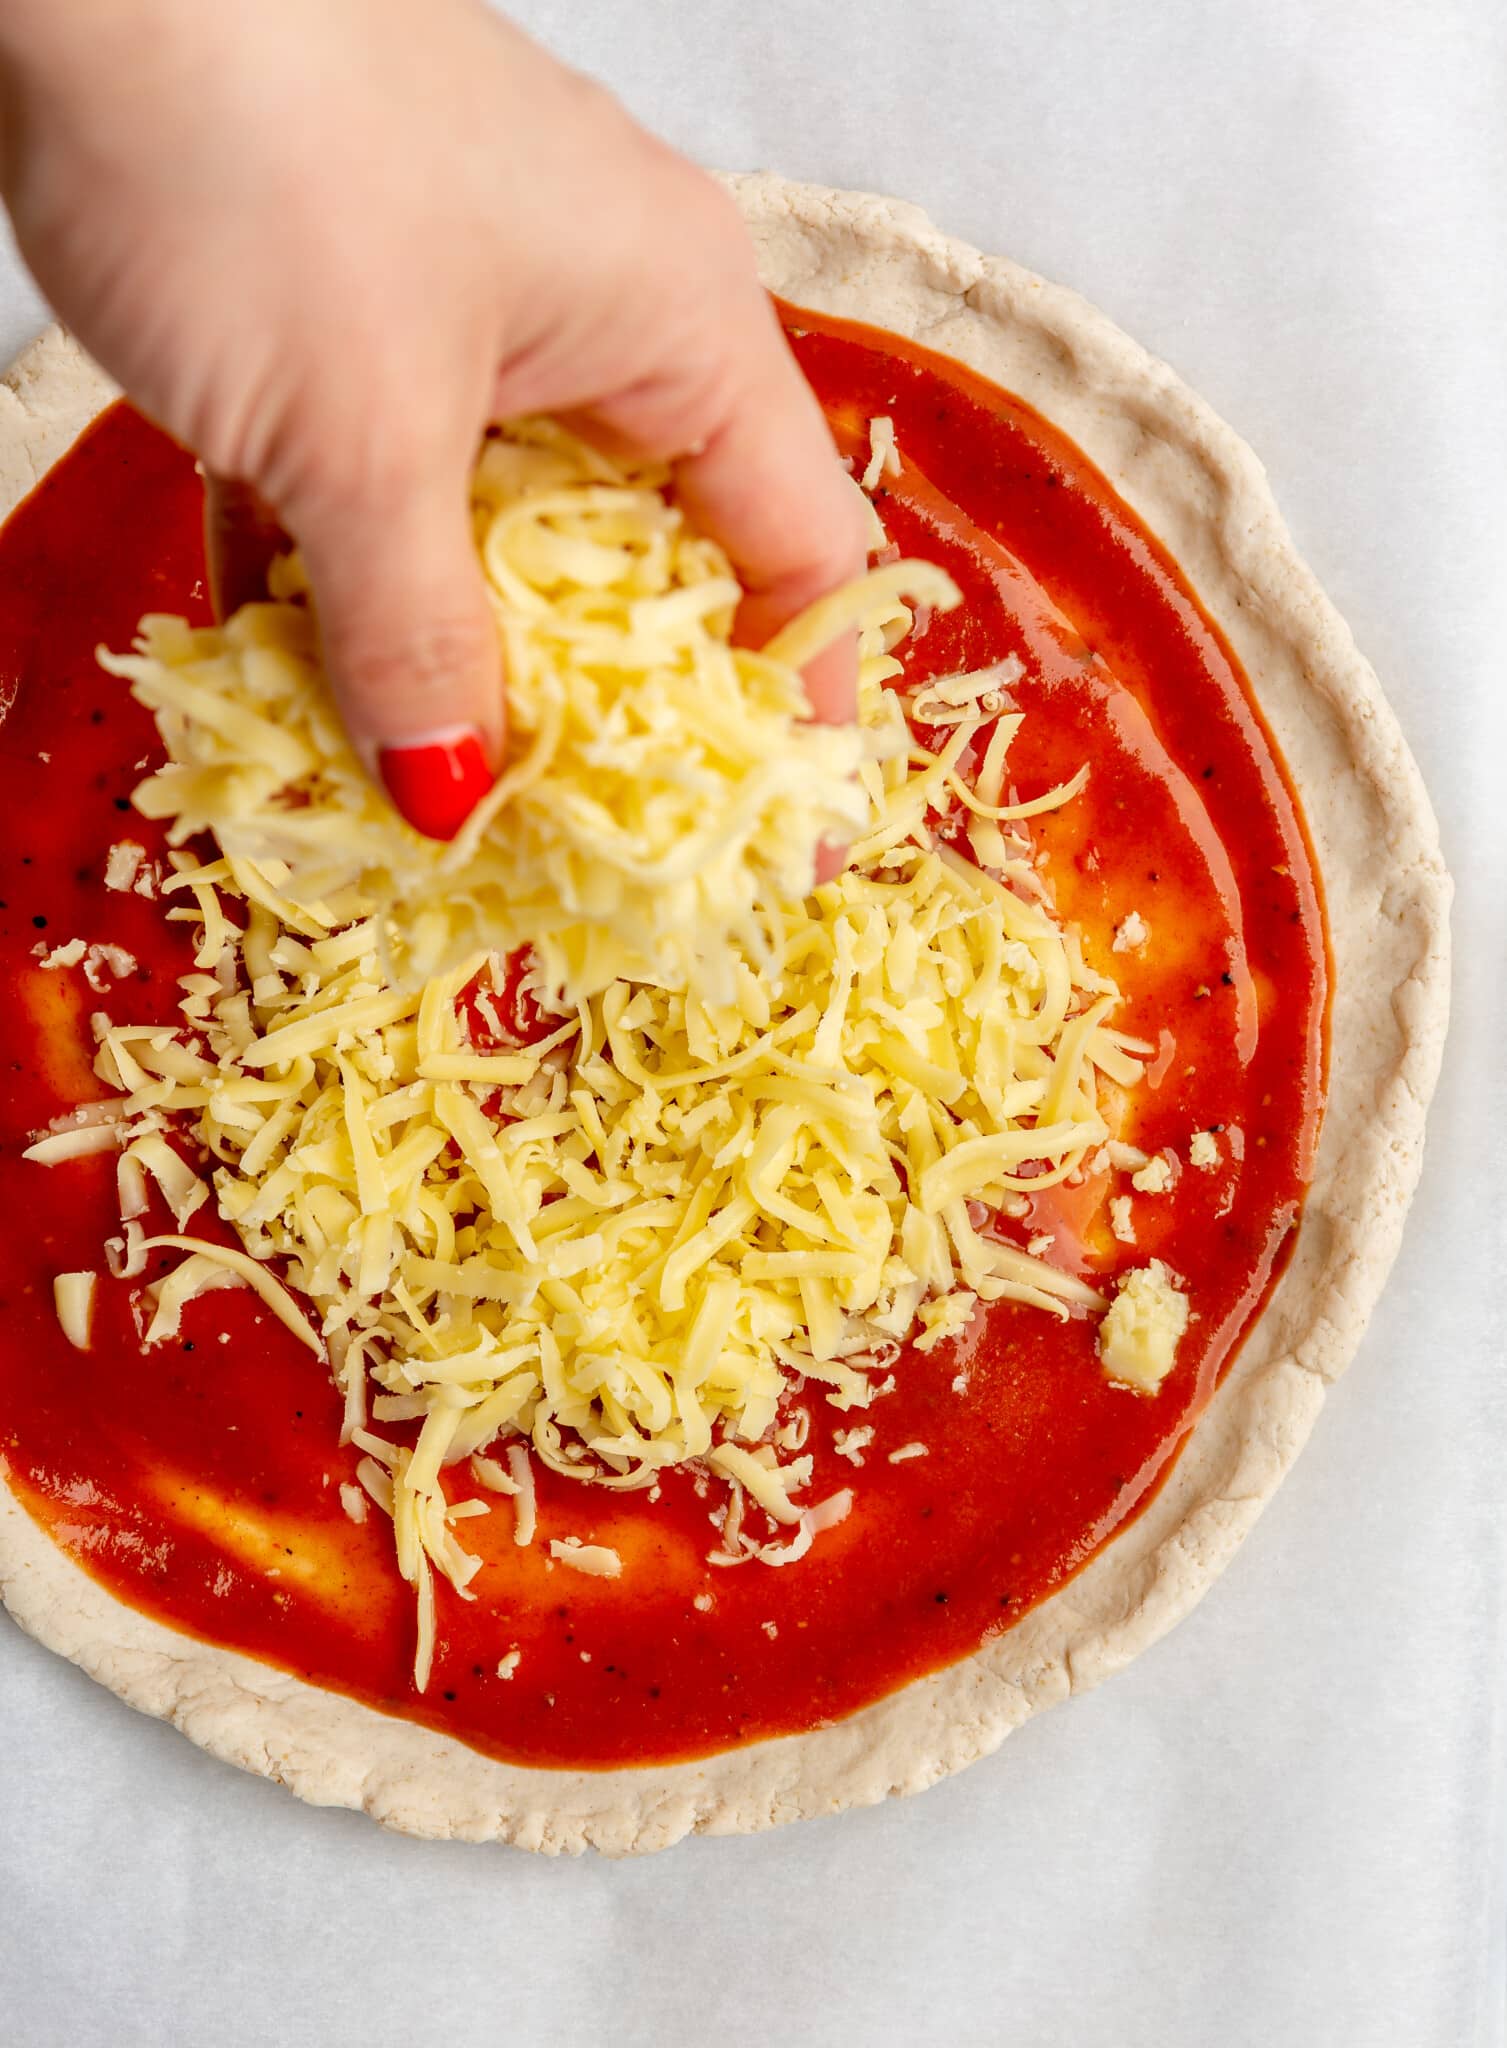 A person using their hands to sprinkle mozzarella cheese onto pizza dough.